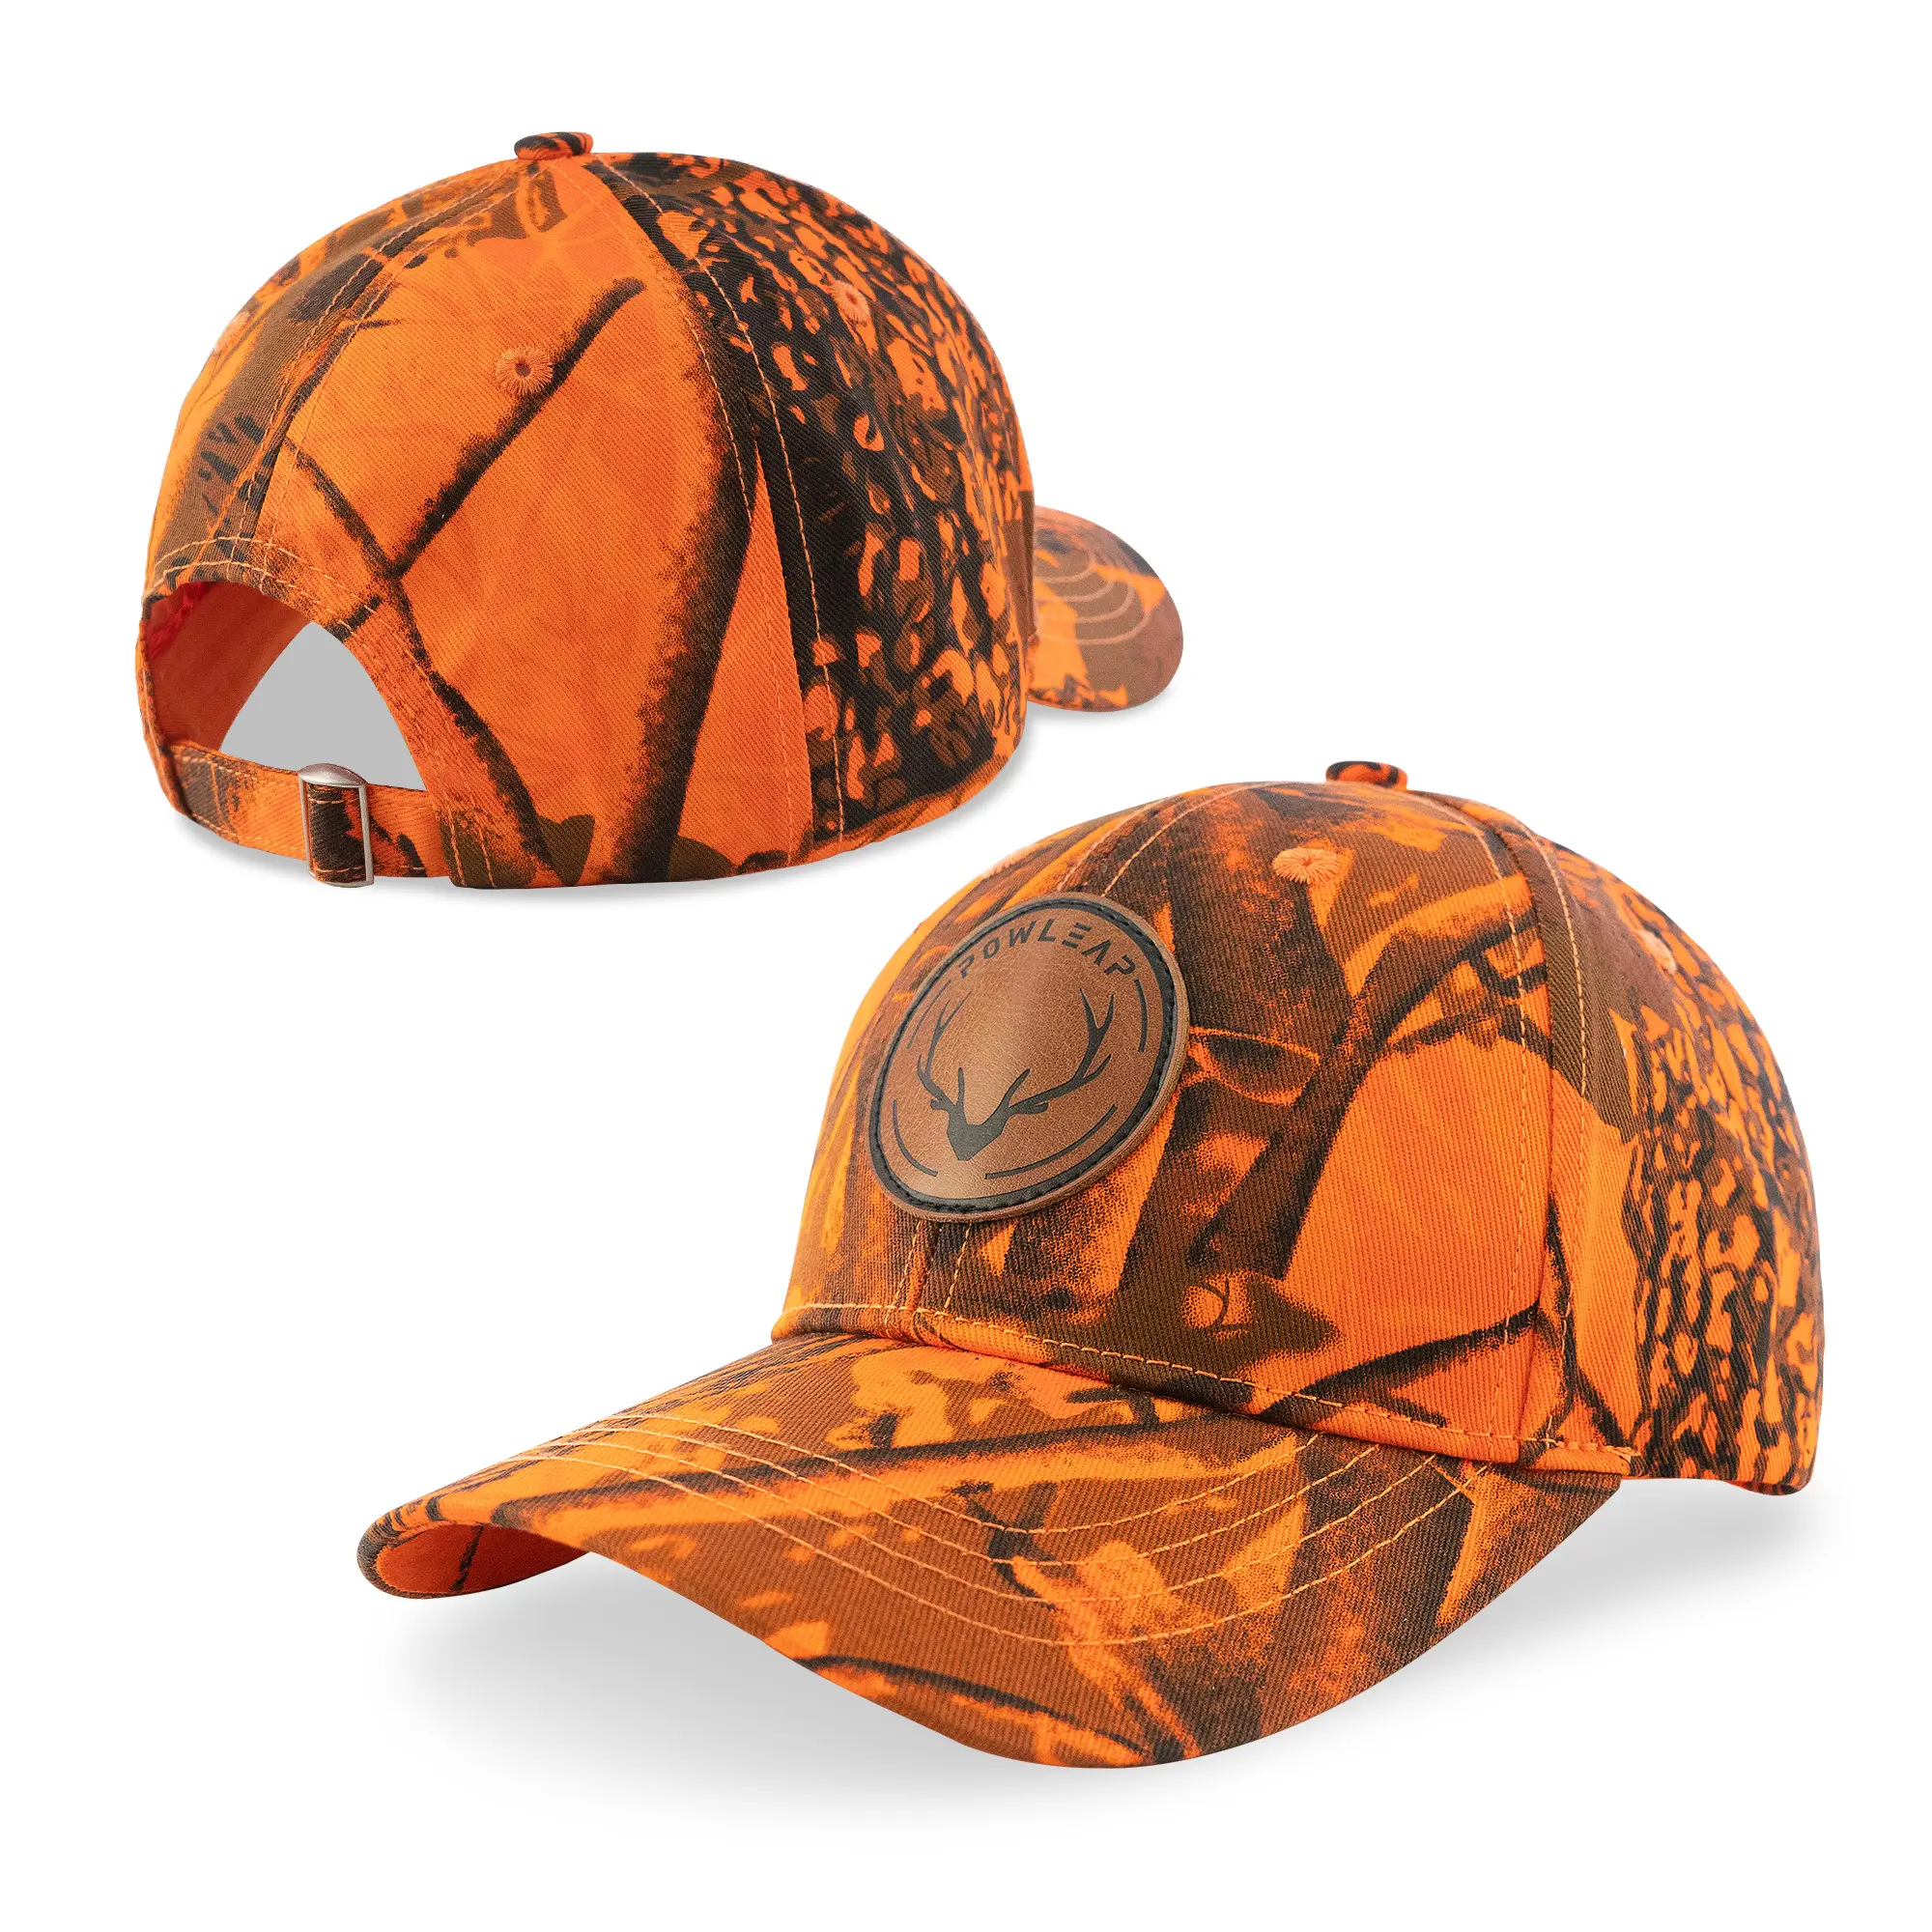 New Series Blaze Orange Camo Hunting Caps UV50+ Vented Lightweight Baseball Caps Trucker Hats For Sale